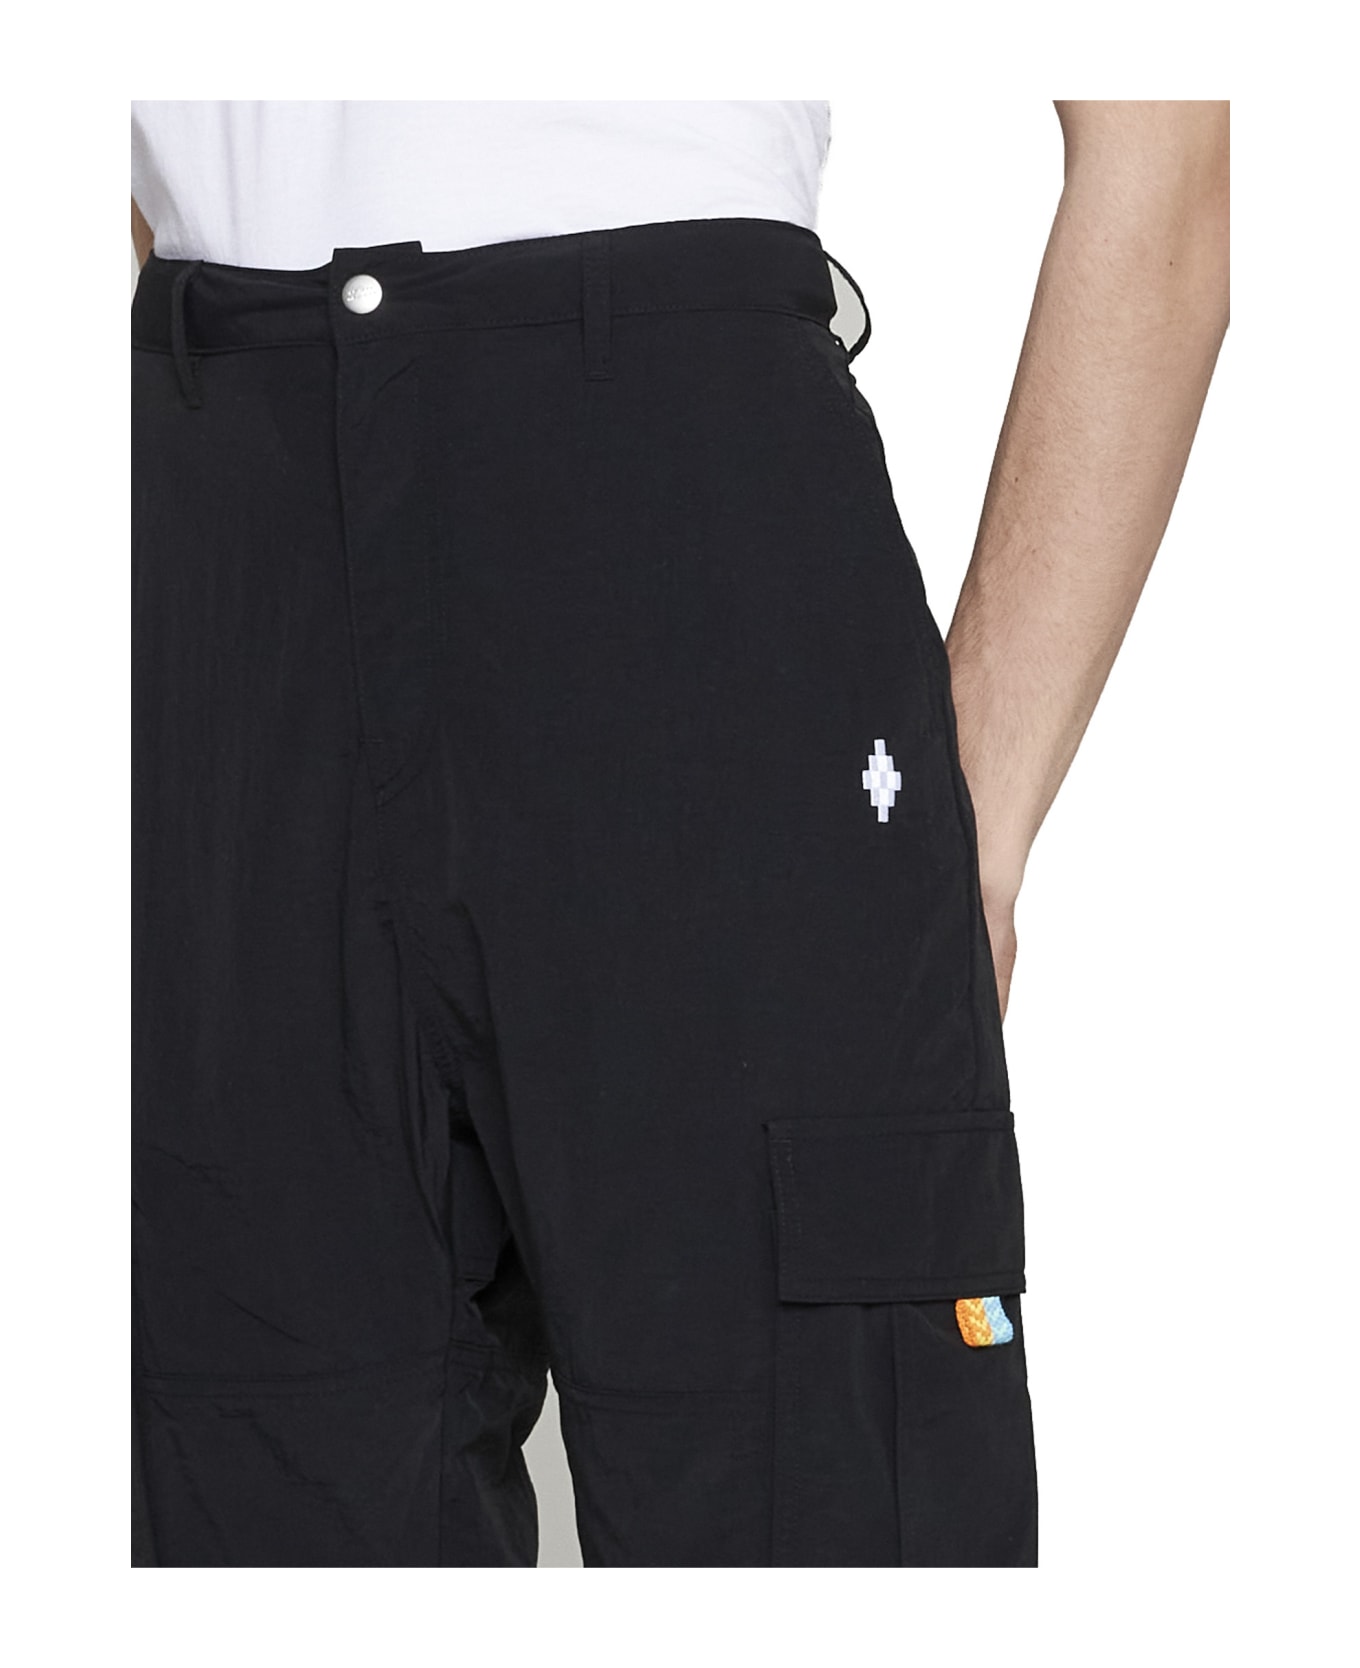 Marcelo Burlon Cargo Cross Pants - Black White